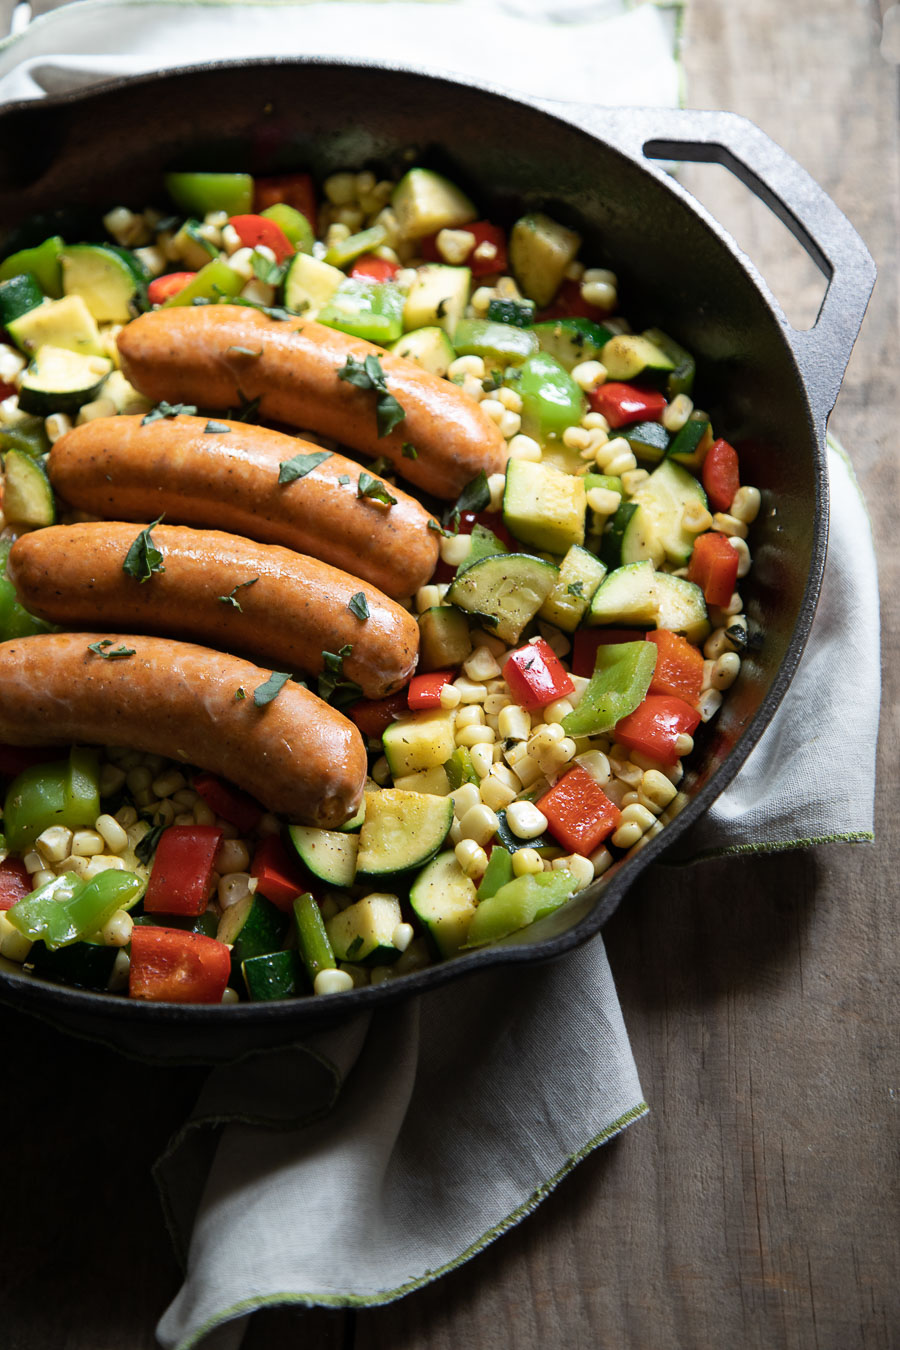 Smoked Sausage Skillet Recipe with Veggies - Easy Dinner Idea